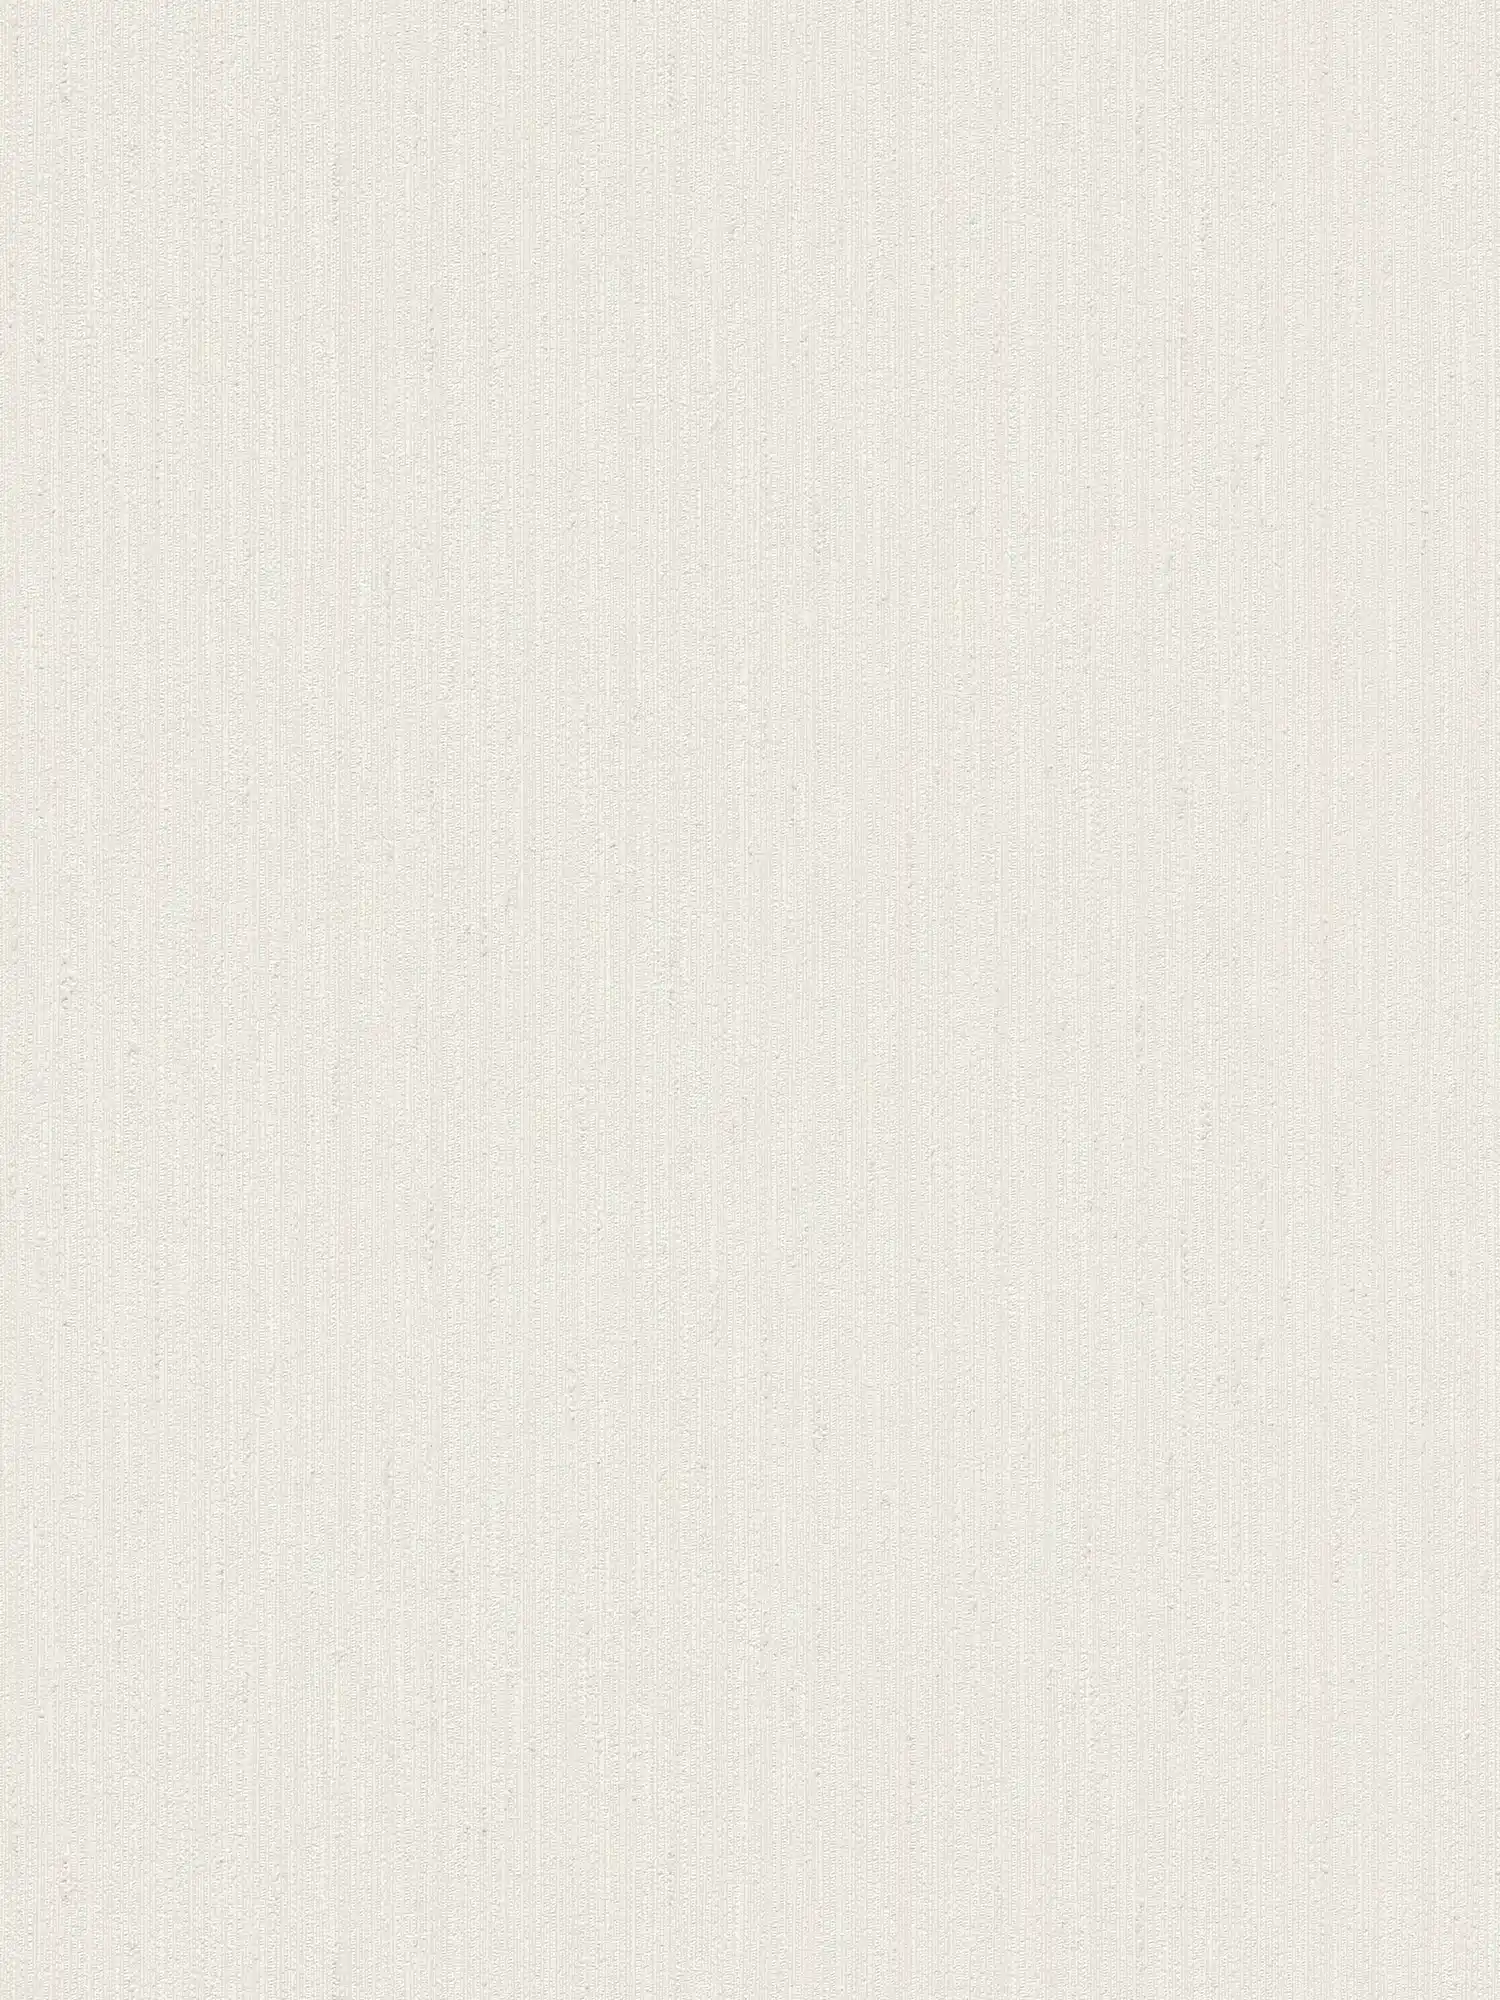 Single-coloured non-woven wallpaper with a light texture - white
